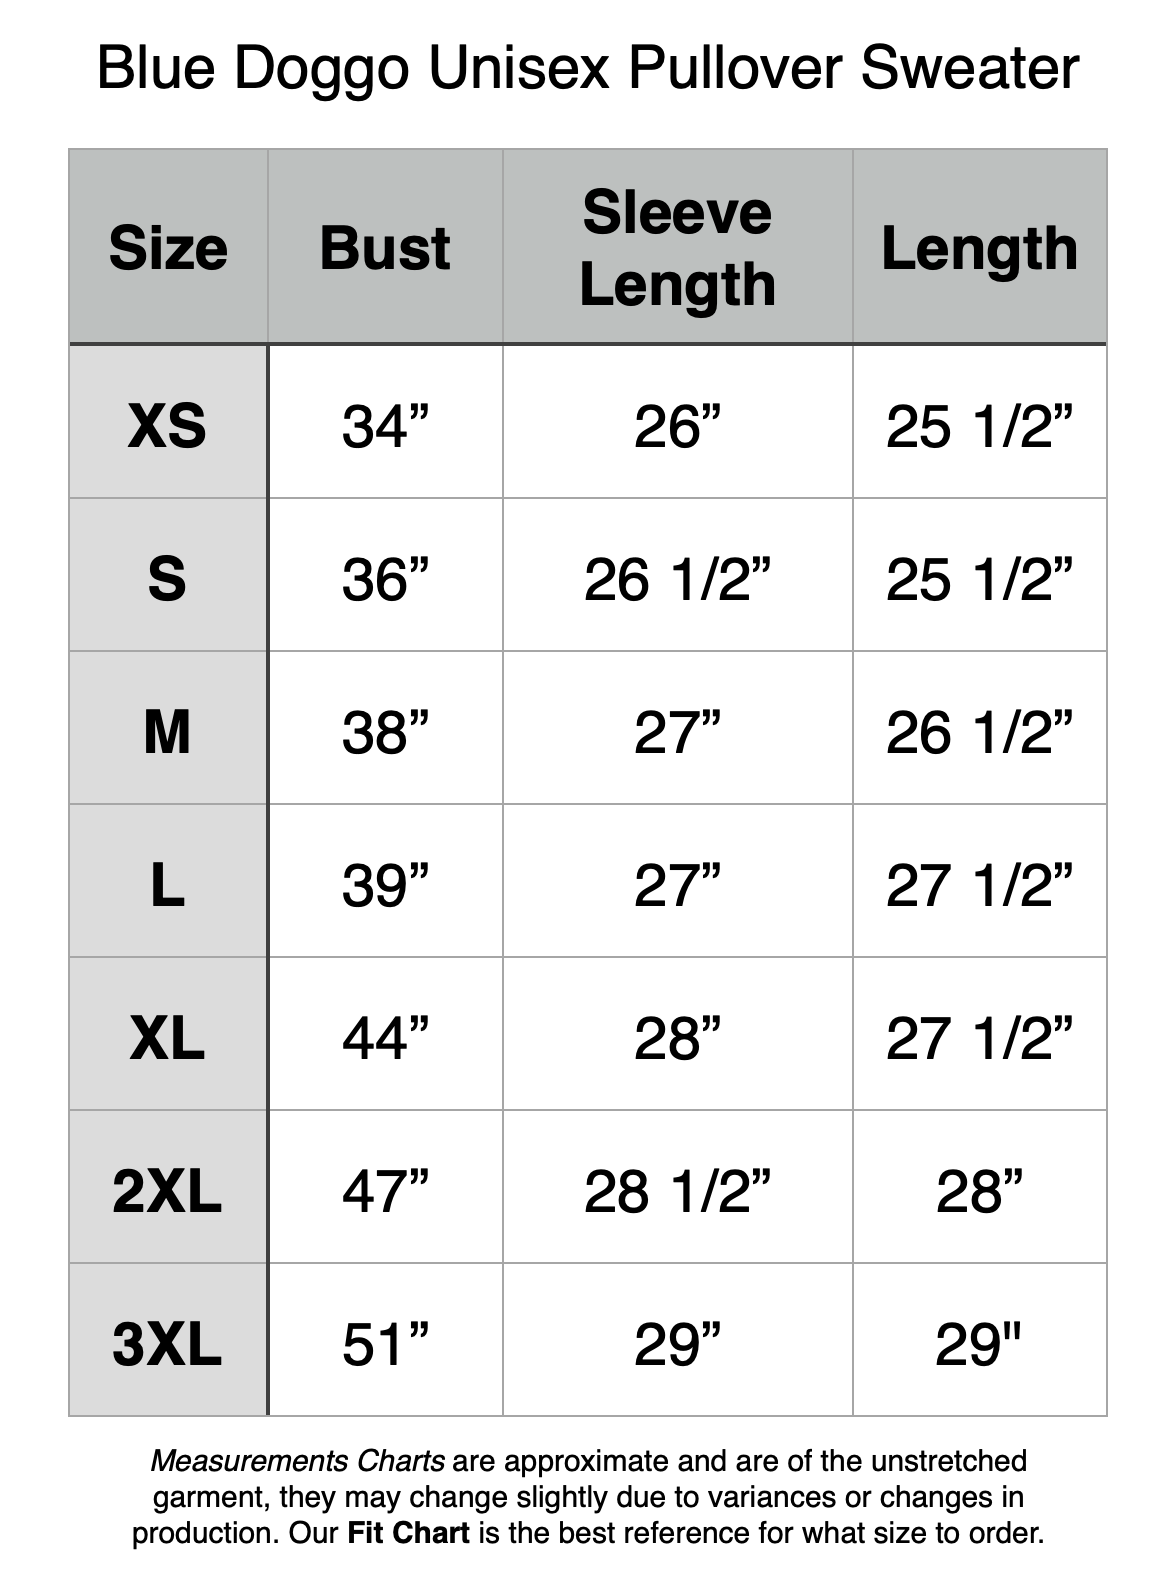 Blue Doggo Unisex Pullover Sweater - XS - 34" Bust, 26" Sleeve Length, 25.5" Length. S - 36" Bust, 26.6" Sleeve Length, 25.5" Length. M - 38" Bust, 27" Sleeve Length, 26.5" Length. L - 39" Bust, 27" Sleeve Length, 27.5" Length. XL - 44" Bust, 28" Sleeve Length, 27.5" Length. 2XL - 47" Bust, 28.5" Sleeve Length, 28" Length. 3XL - 51" Bust, 29" Sleeve Length, 29" Length.